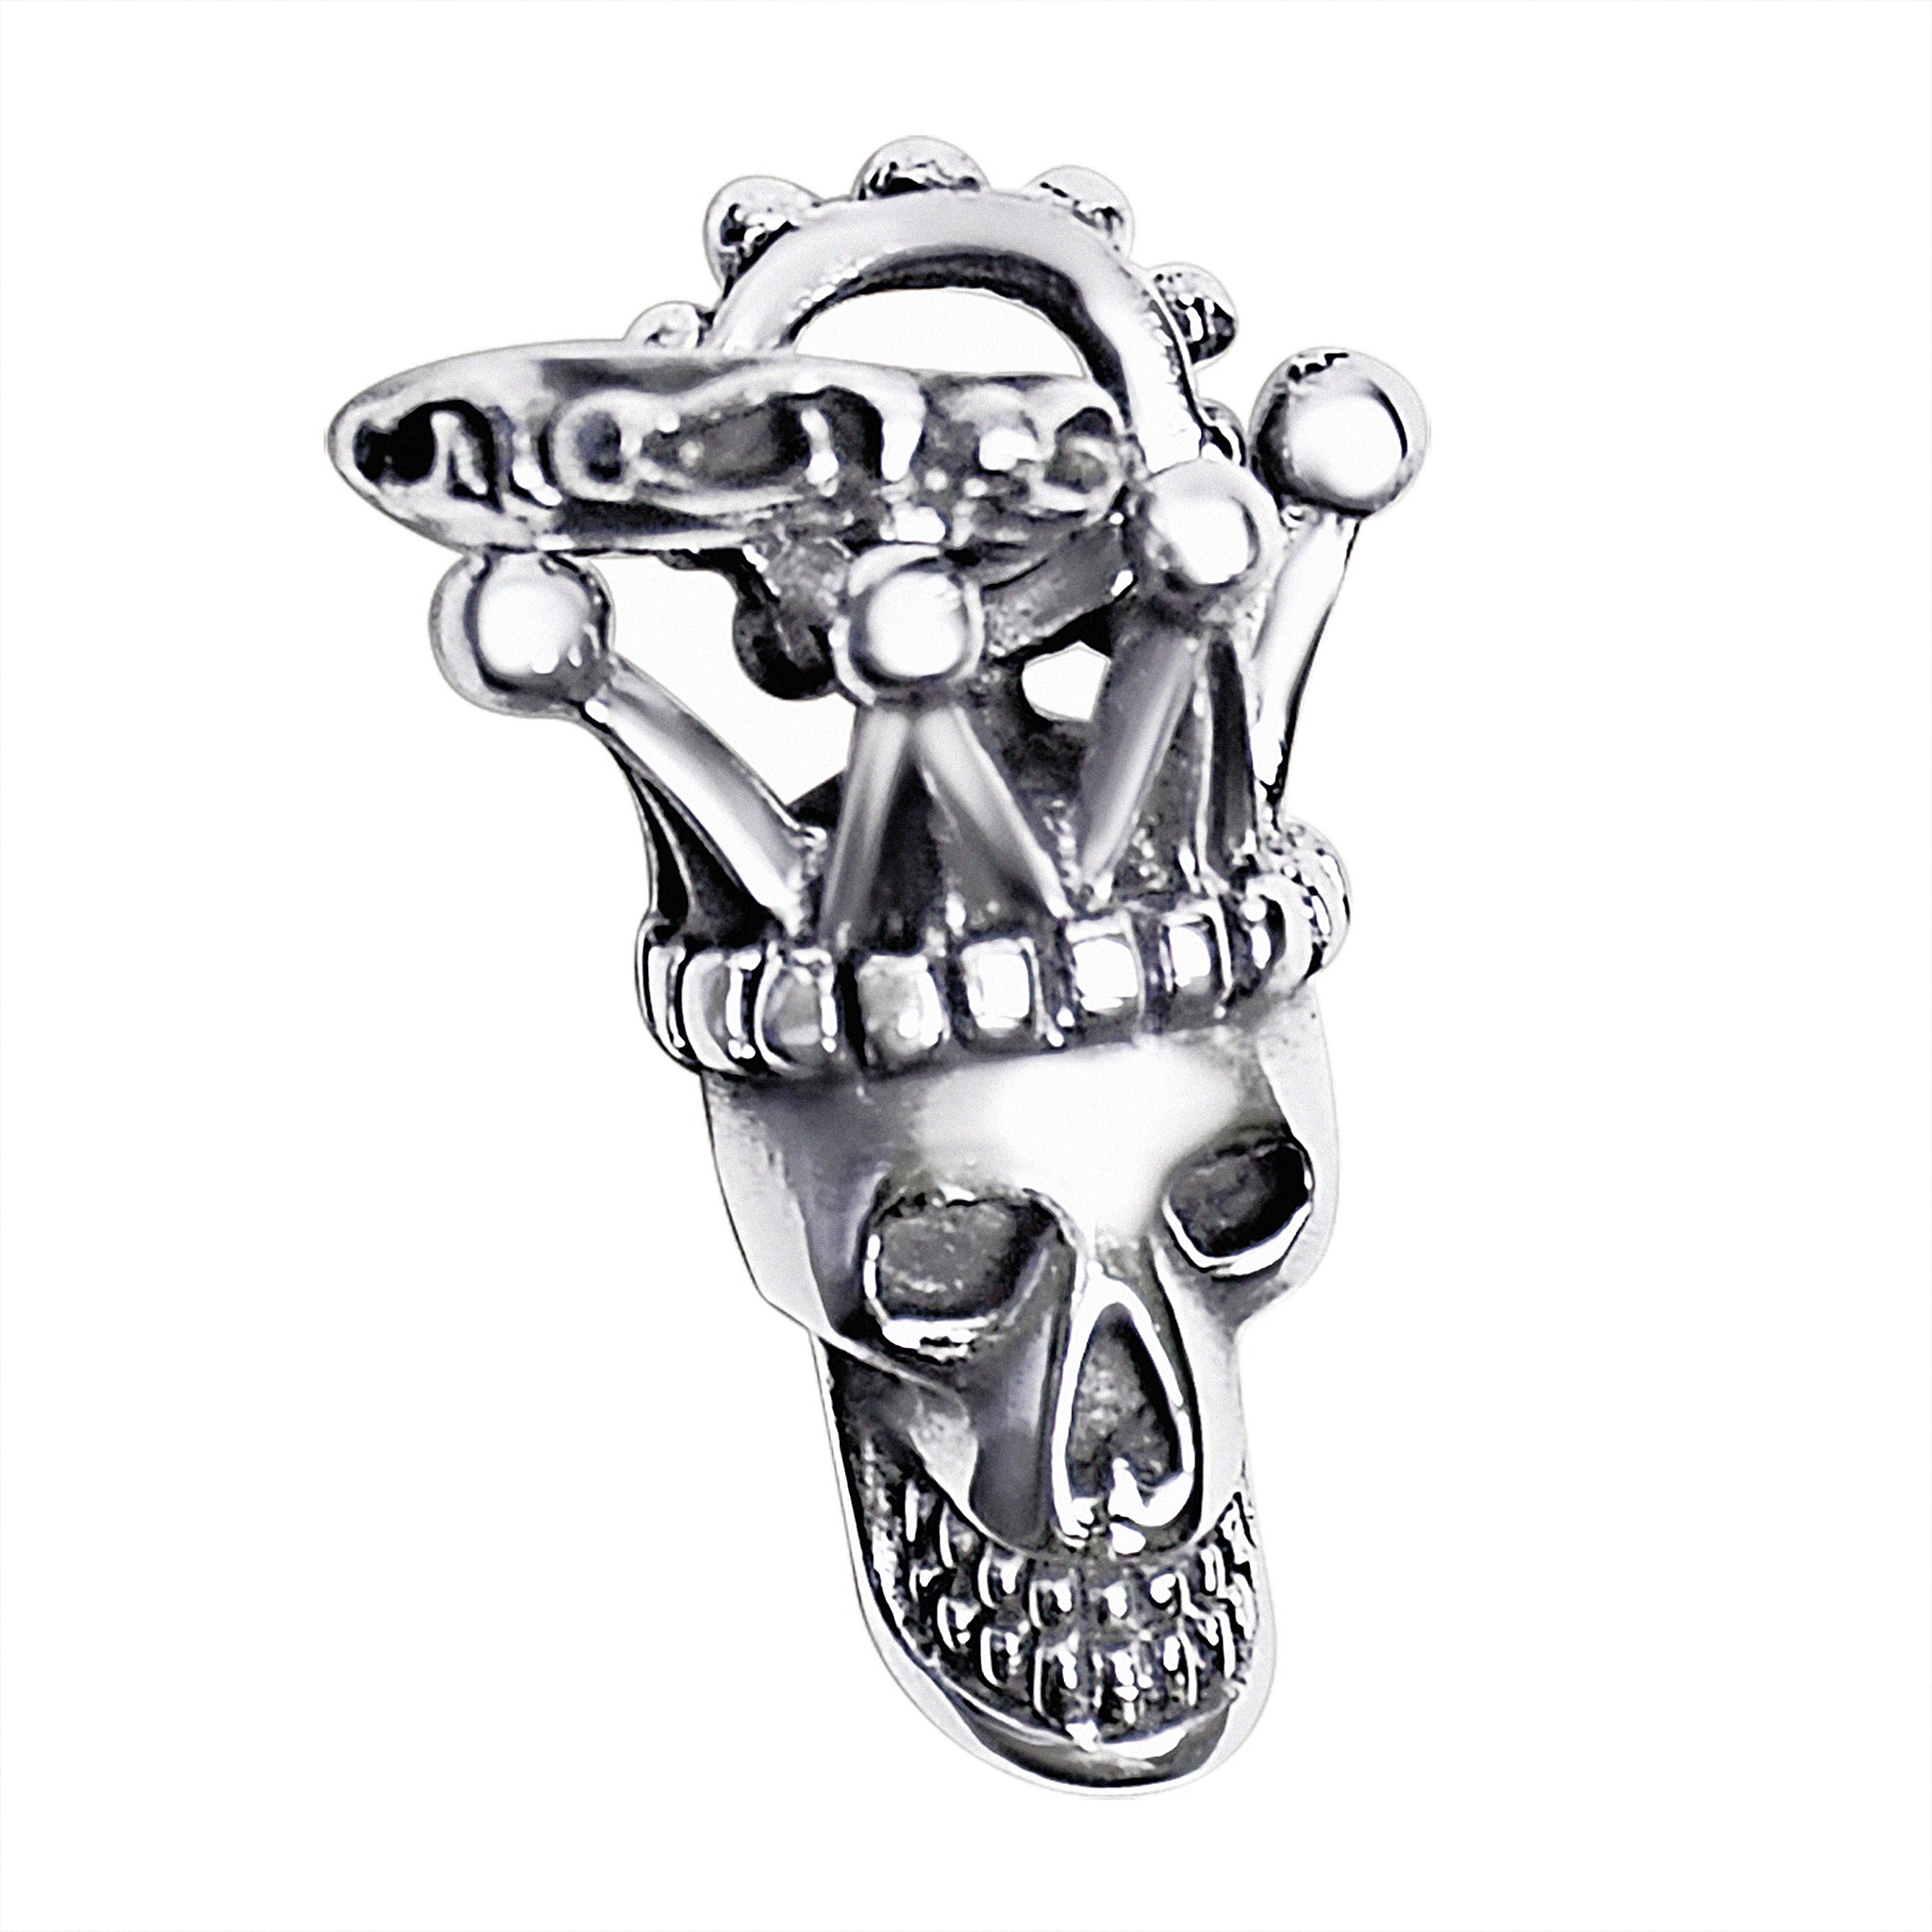 Sterling Silver Jester Skull Pendant / SSP0118-sterling silver pendant- .925 sterling silver pendant- Black Friday Gift- silver pendant- necklace pendant